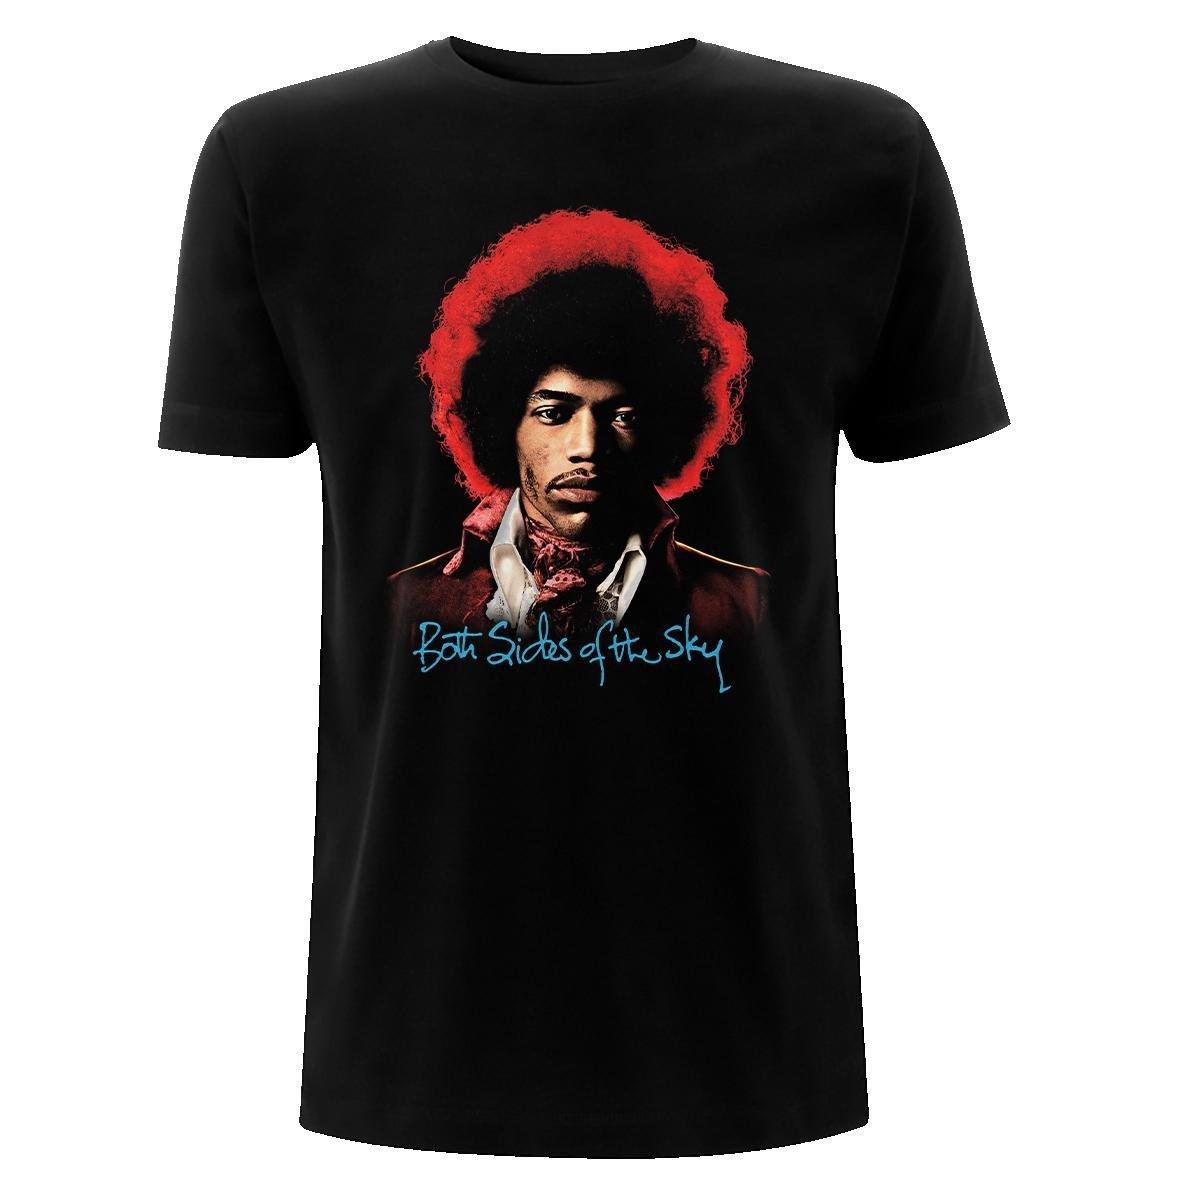 Both Sides Of The Sky Tshirt Herren Schwarz L von Jimi Hendrix